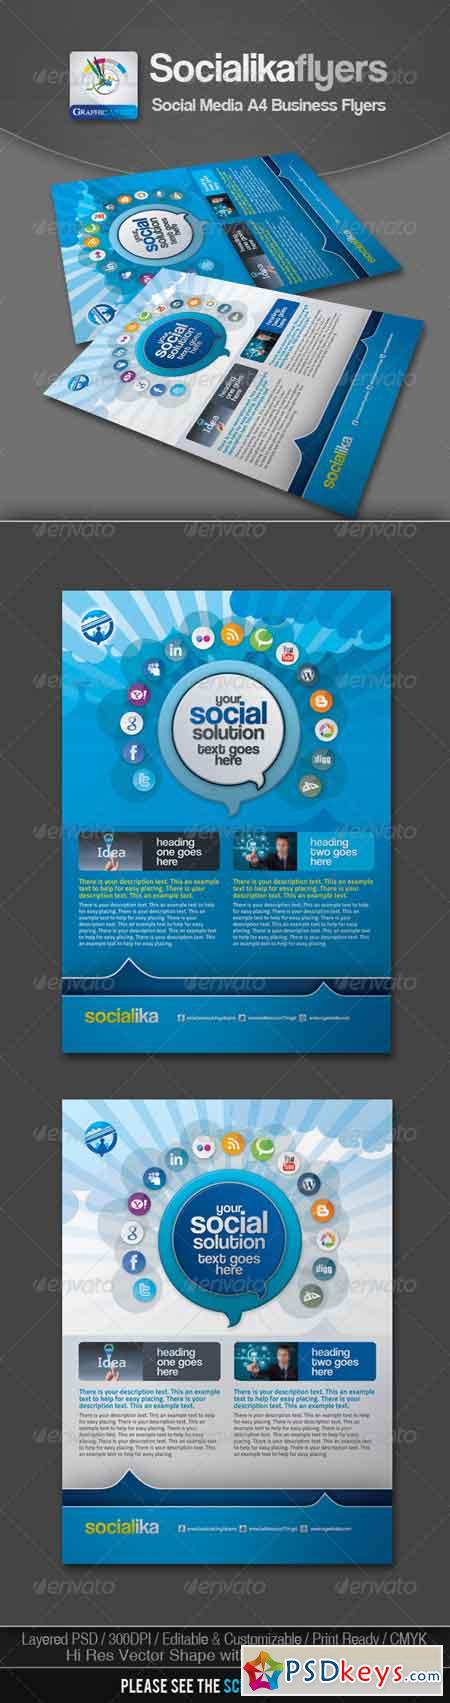 Socialika Social Media Business Flyers 2687564